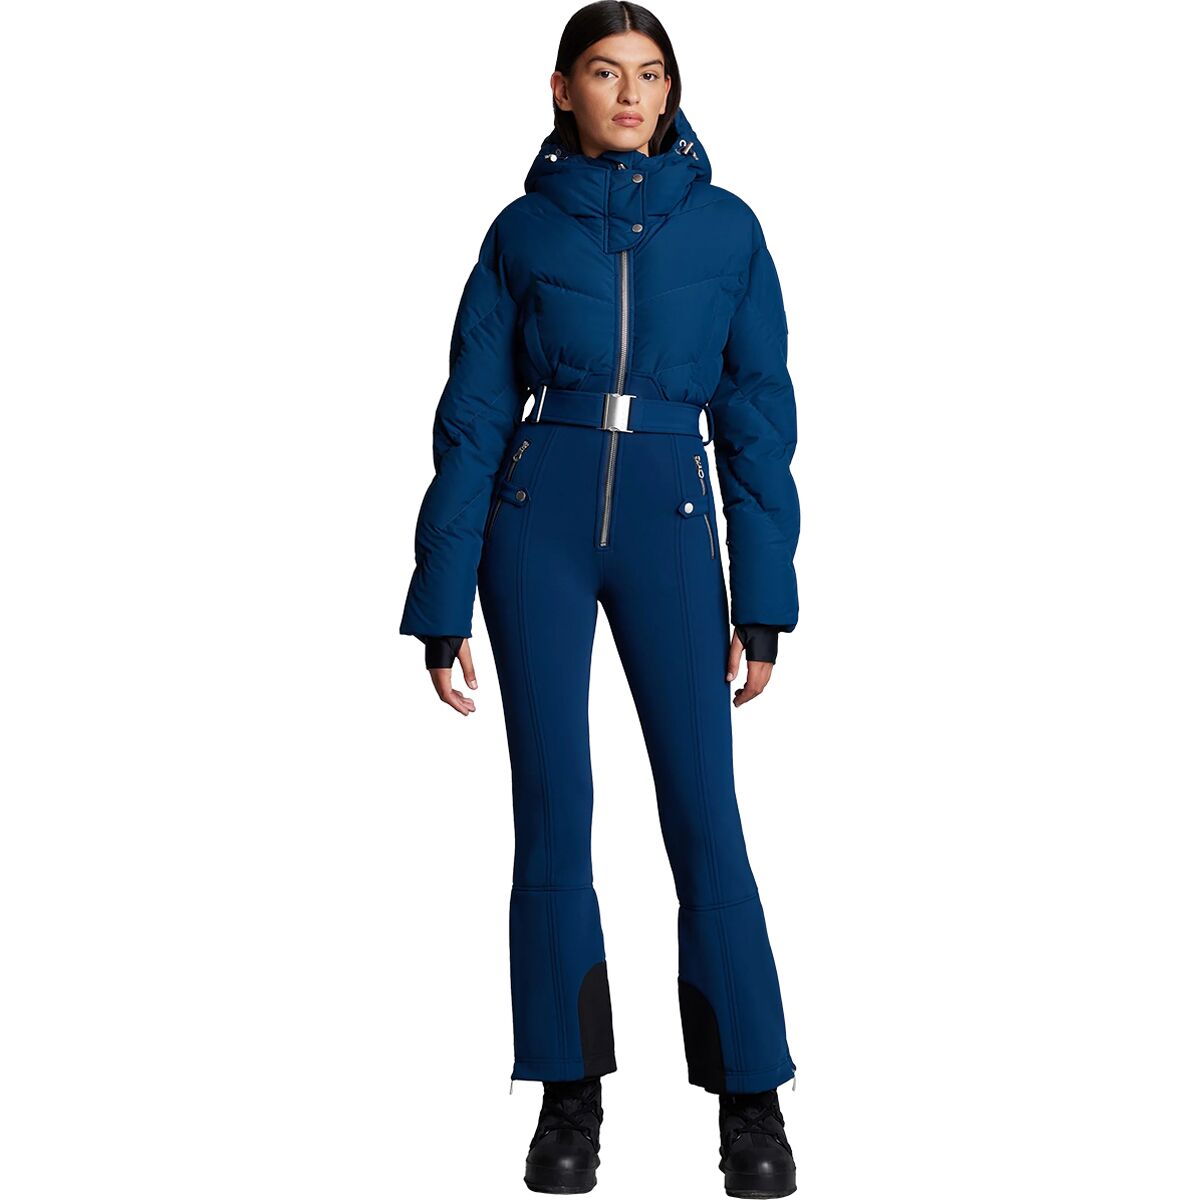 Cordova Ajax Snow Suit - Women's - Clothing | Backcountry